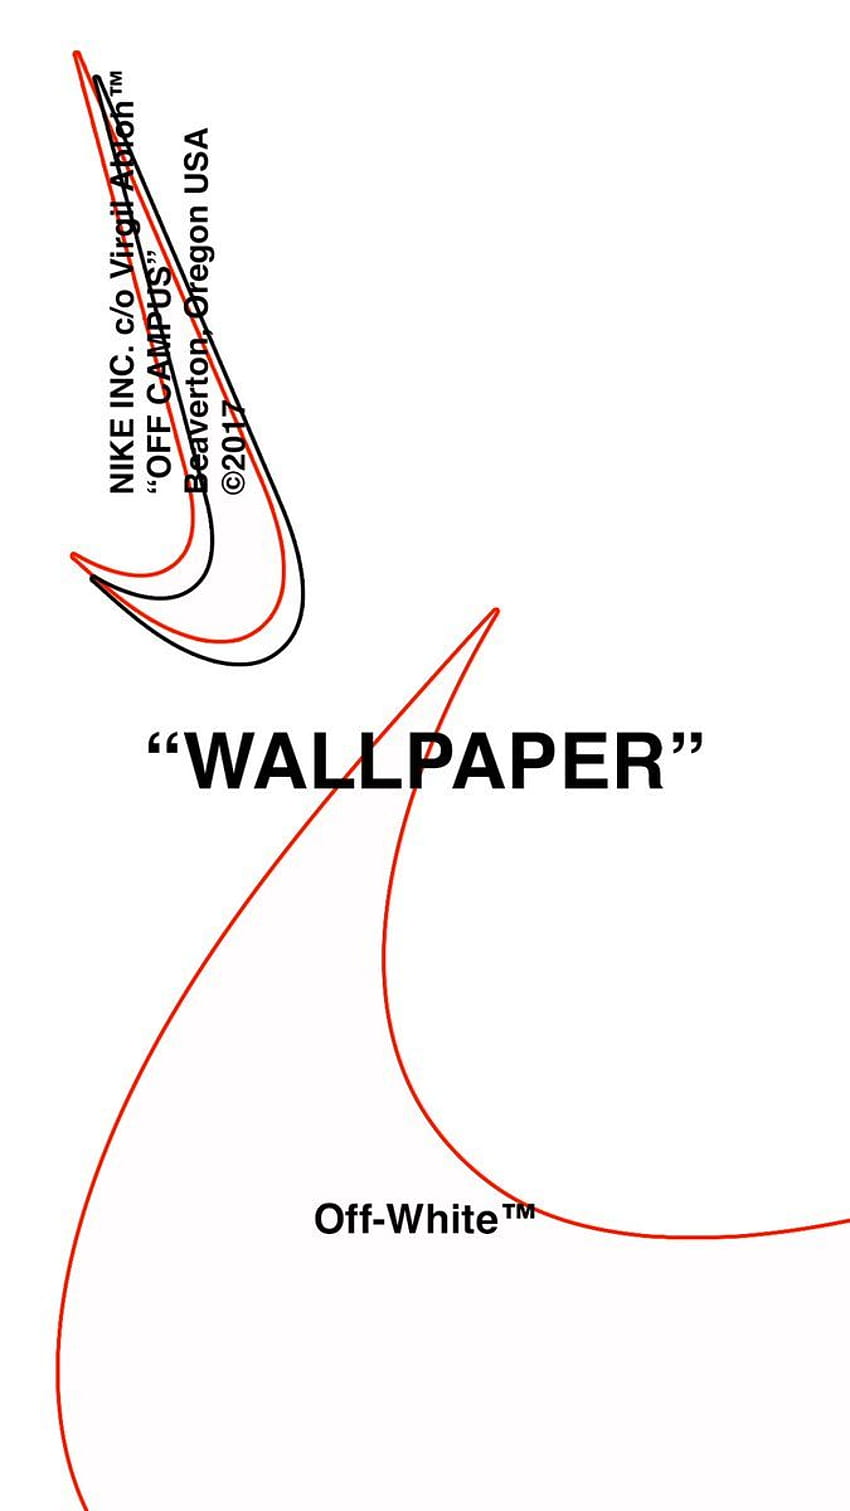 Virgil Abloh Wallpapers - Wallpaper Cave